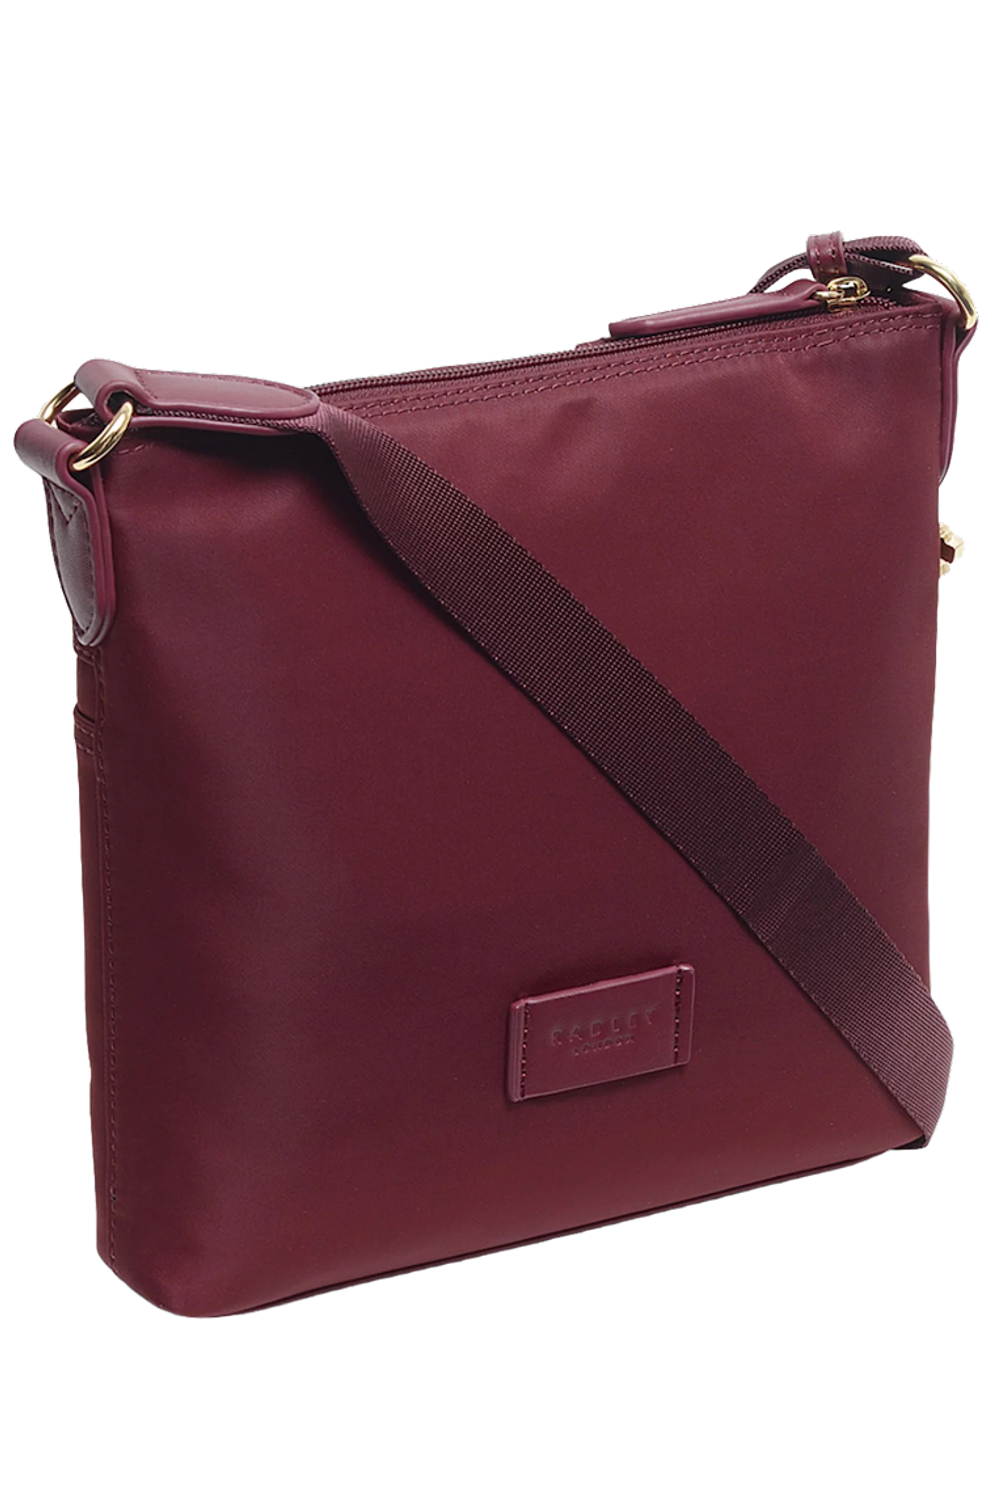 RADLEY London Medium Pockets Leather Crossbody Handbag 